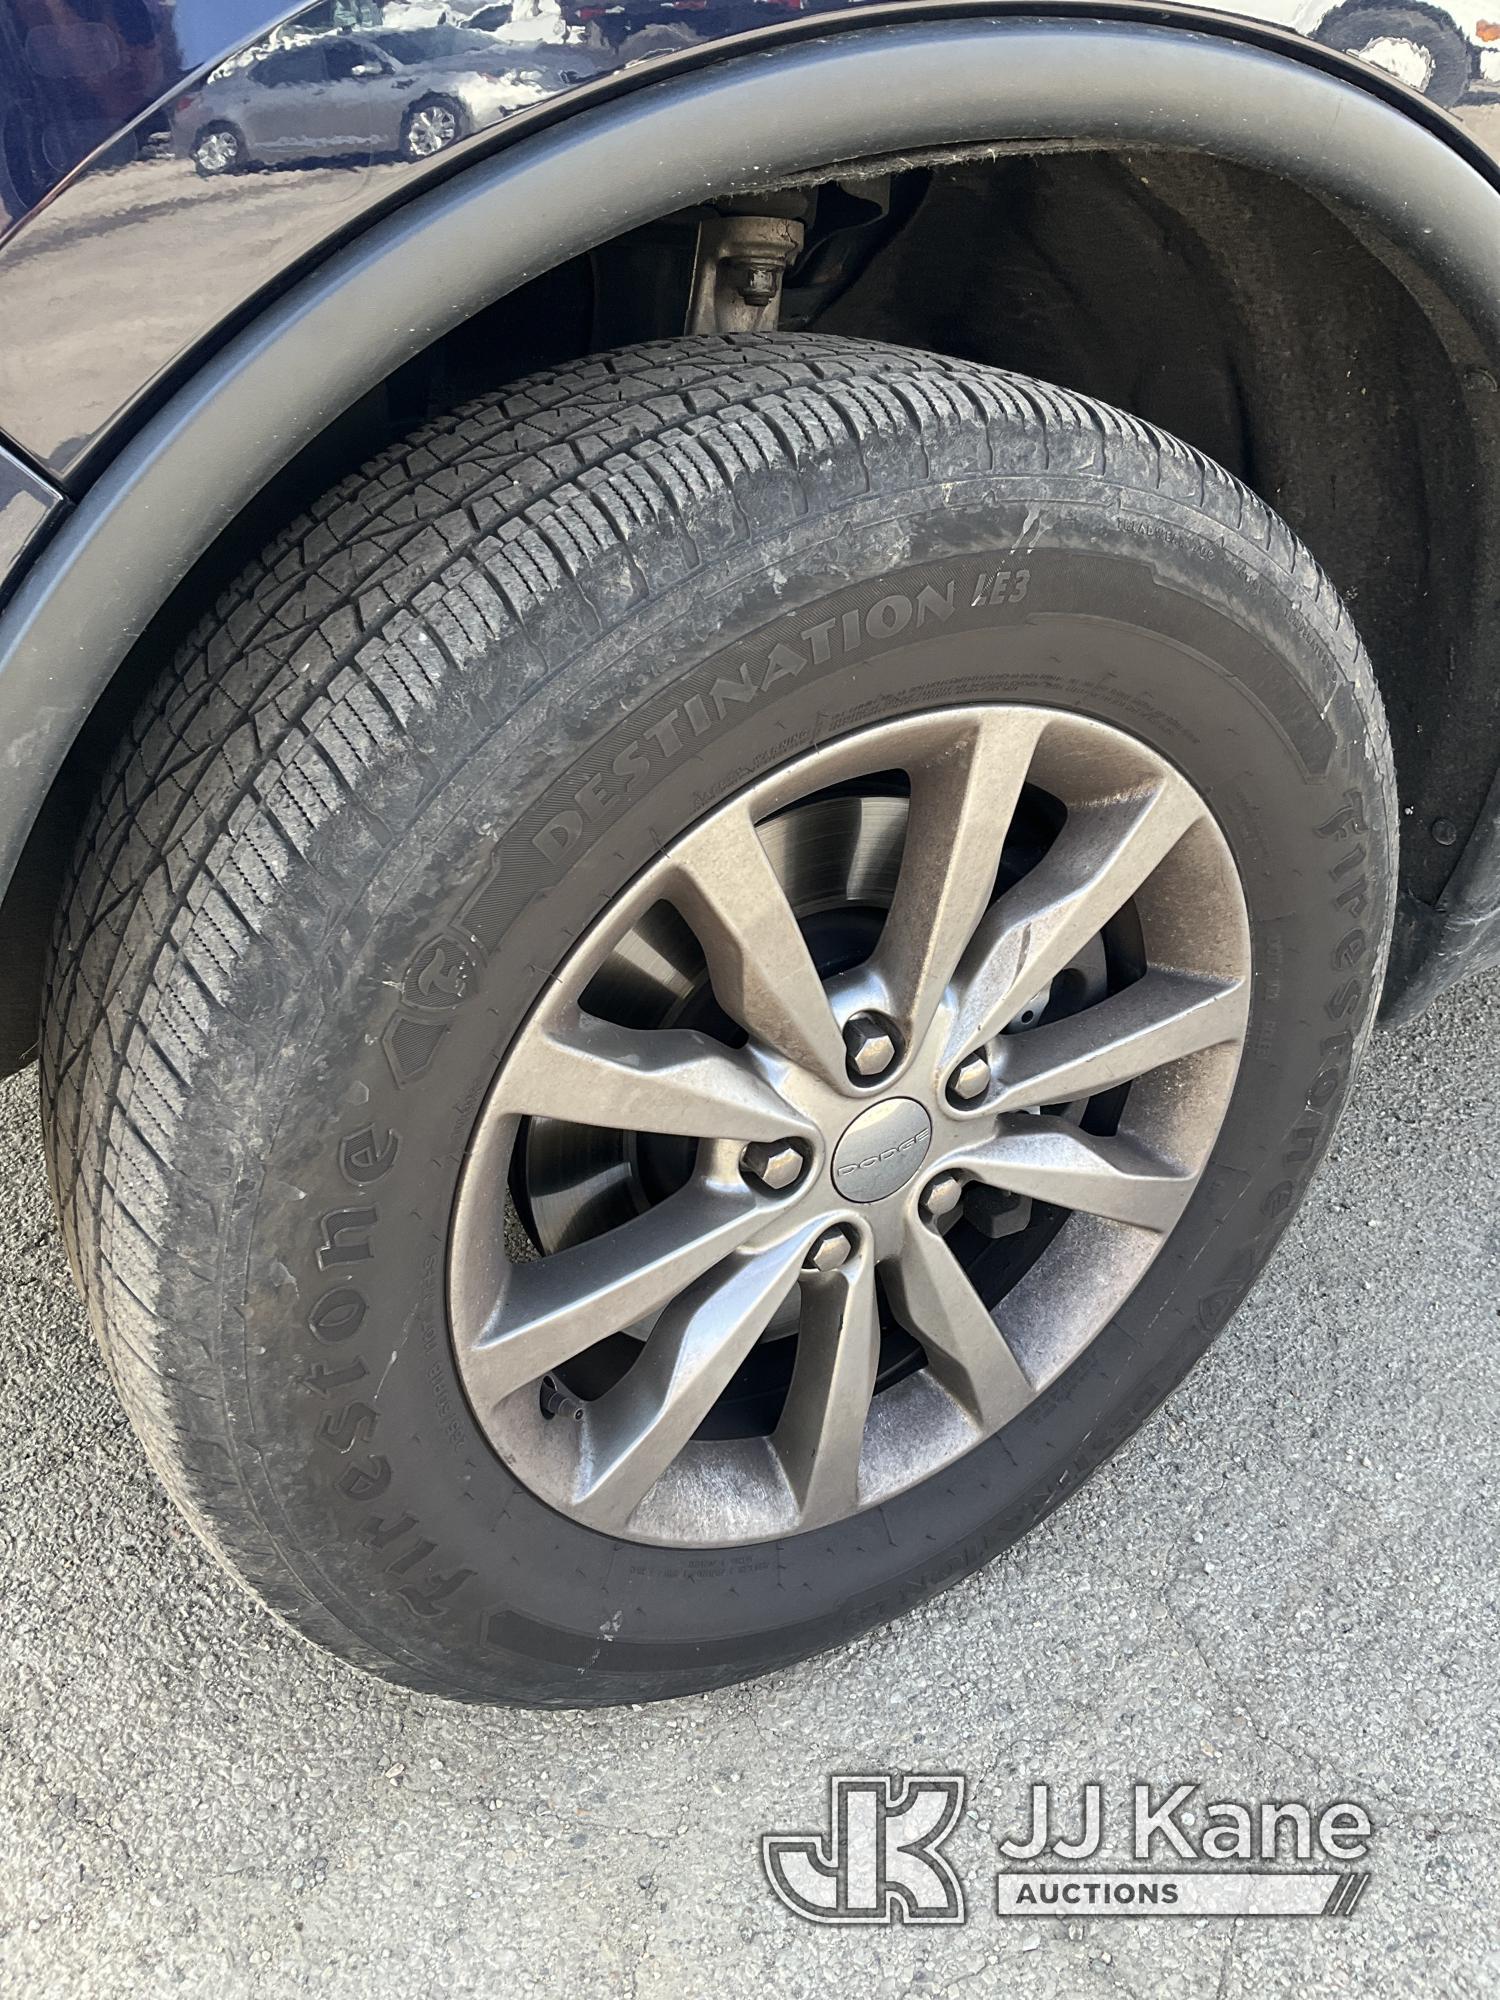 (South Beloit, IL) 2018 Dodge Durango AWD 4-Door Sport Utility Vehicle Runs, Moves